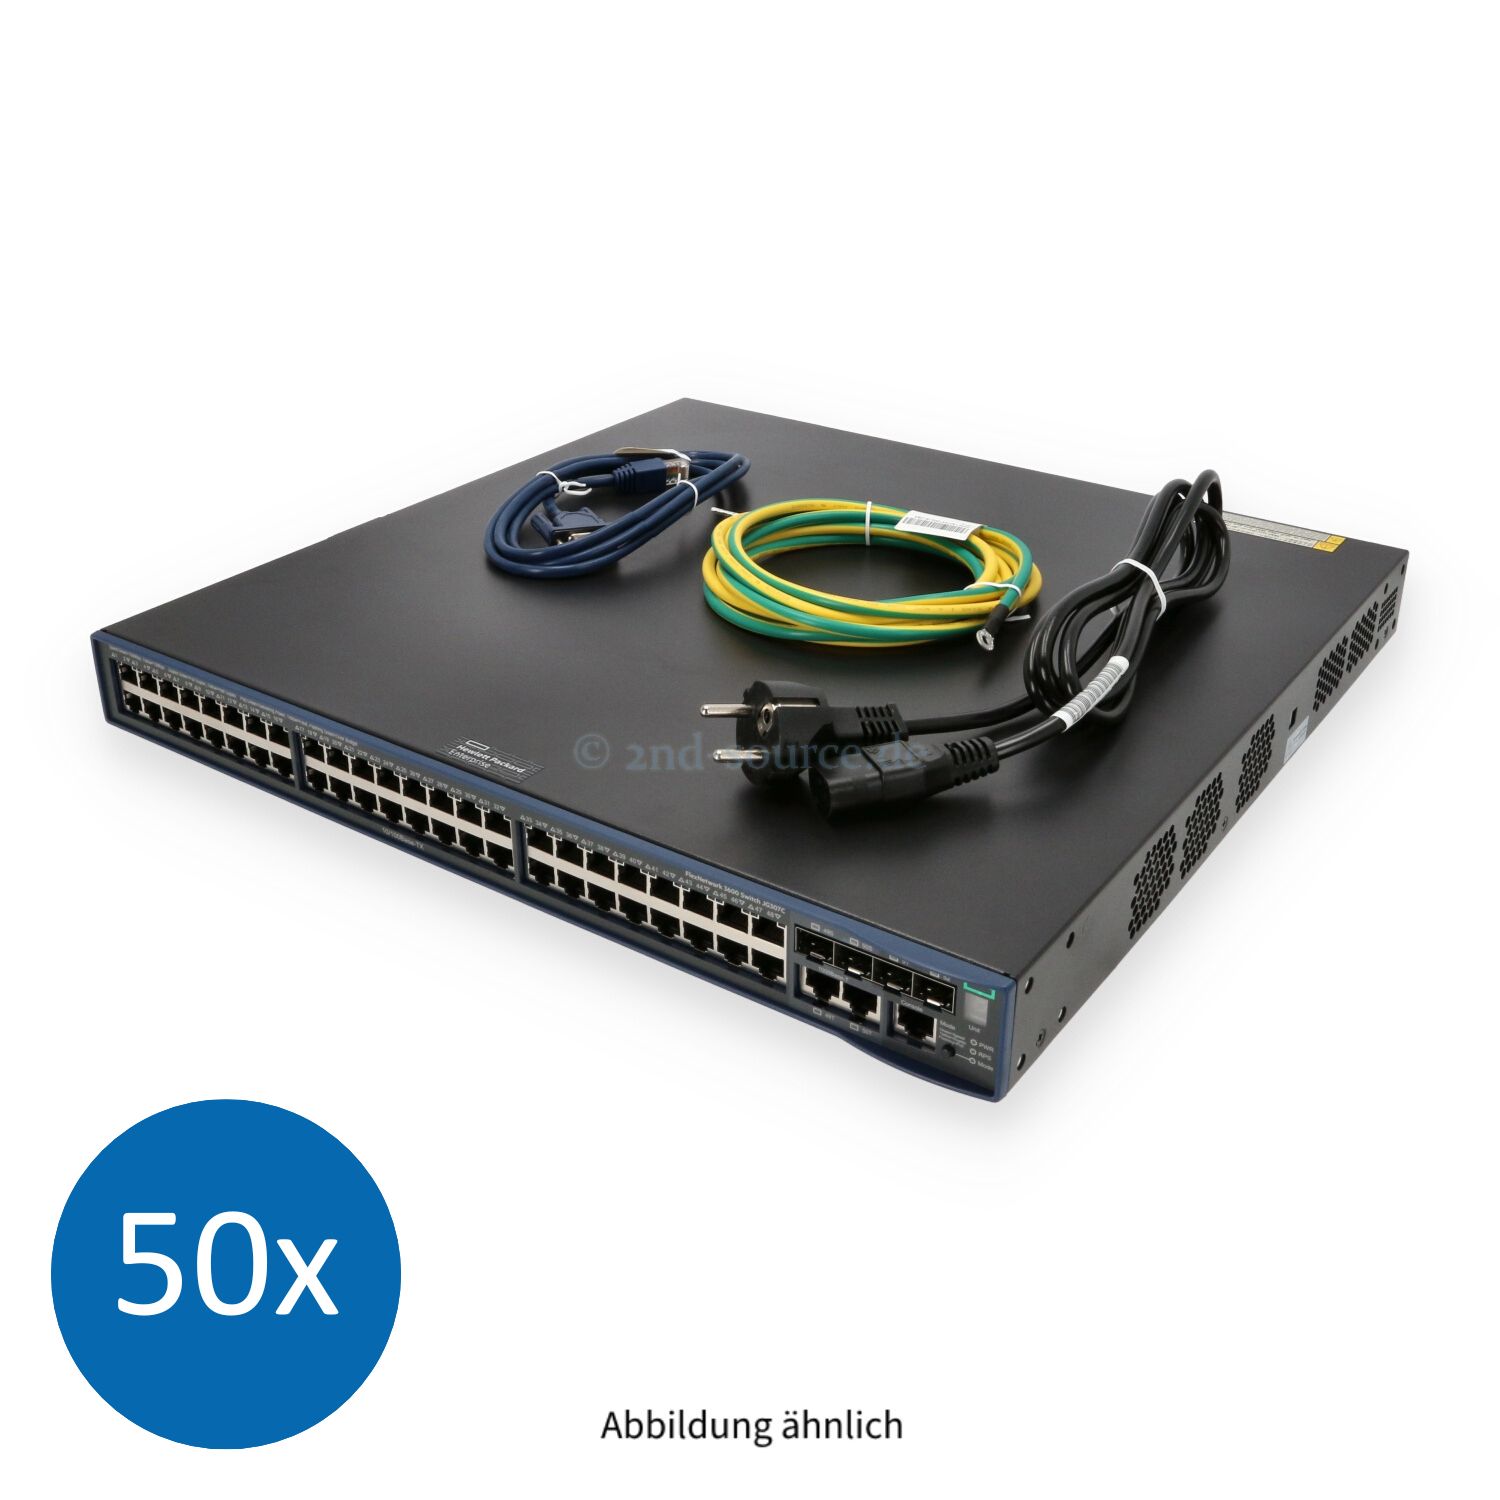 50x HPE FlexNetwork 3600-48G-PoE+ v2 SI 48x 10/100Base-T PoE+ 4x SFP 1GbE 2x Dual-Personality 1GbE Managed Switch JG307C JG307-61301